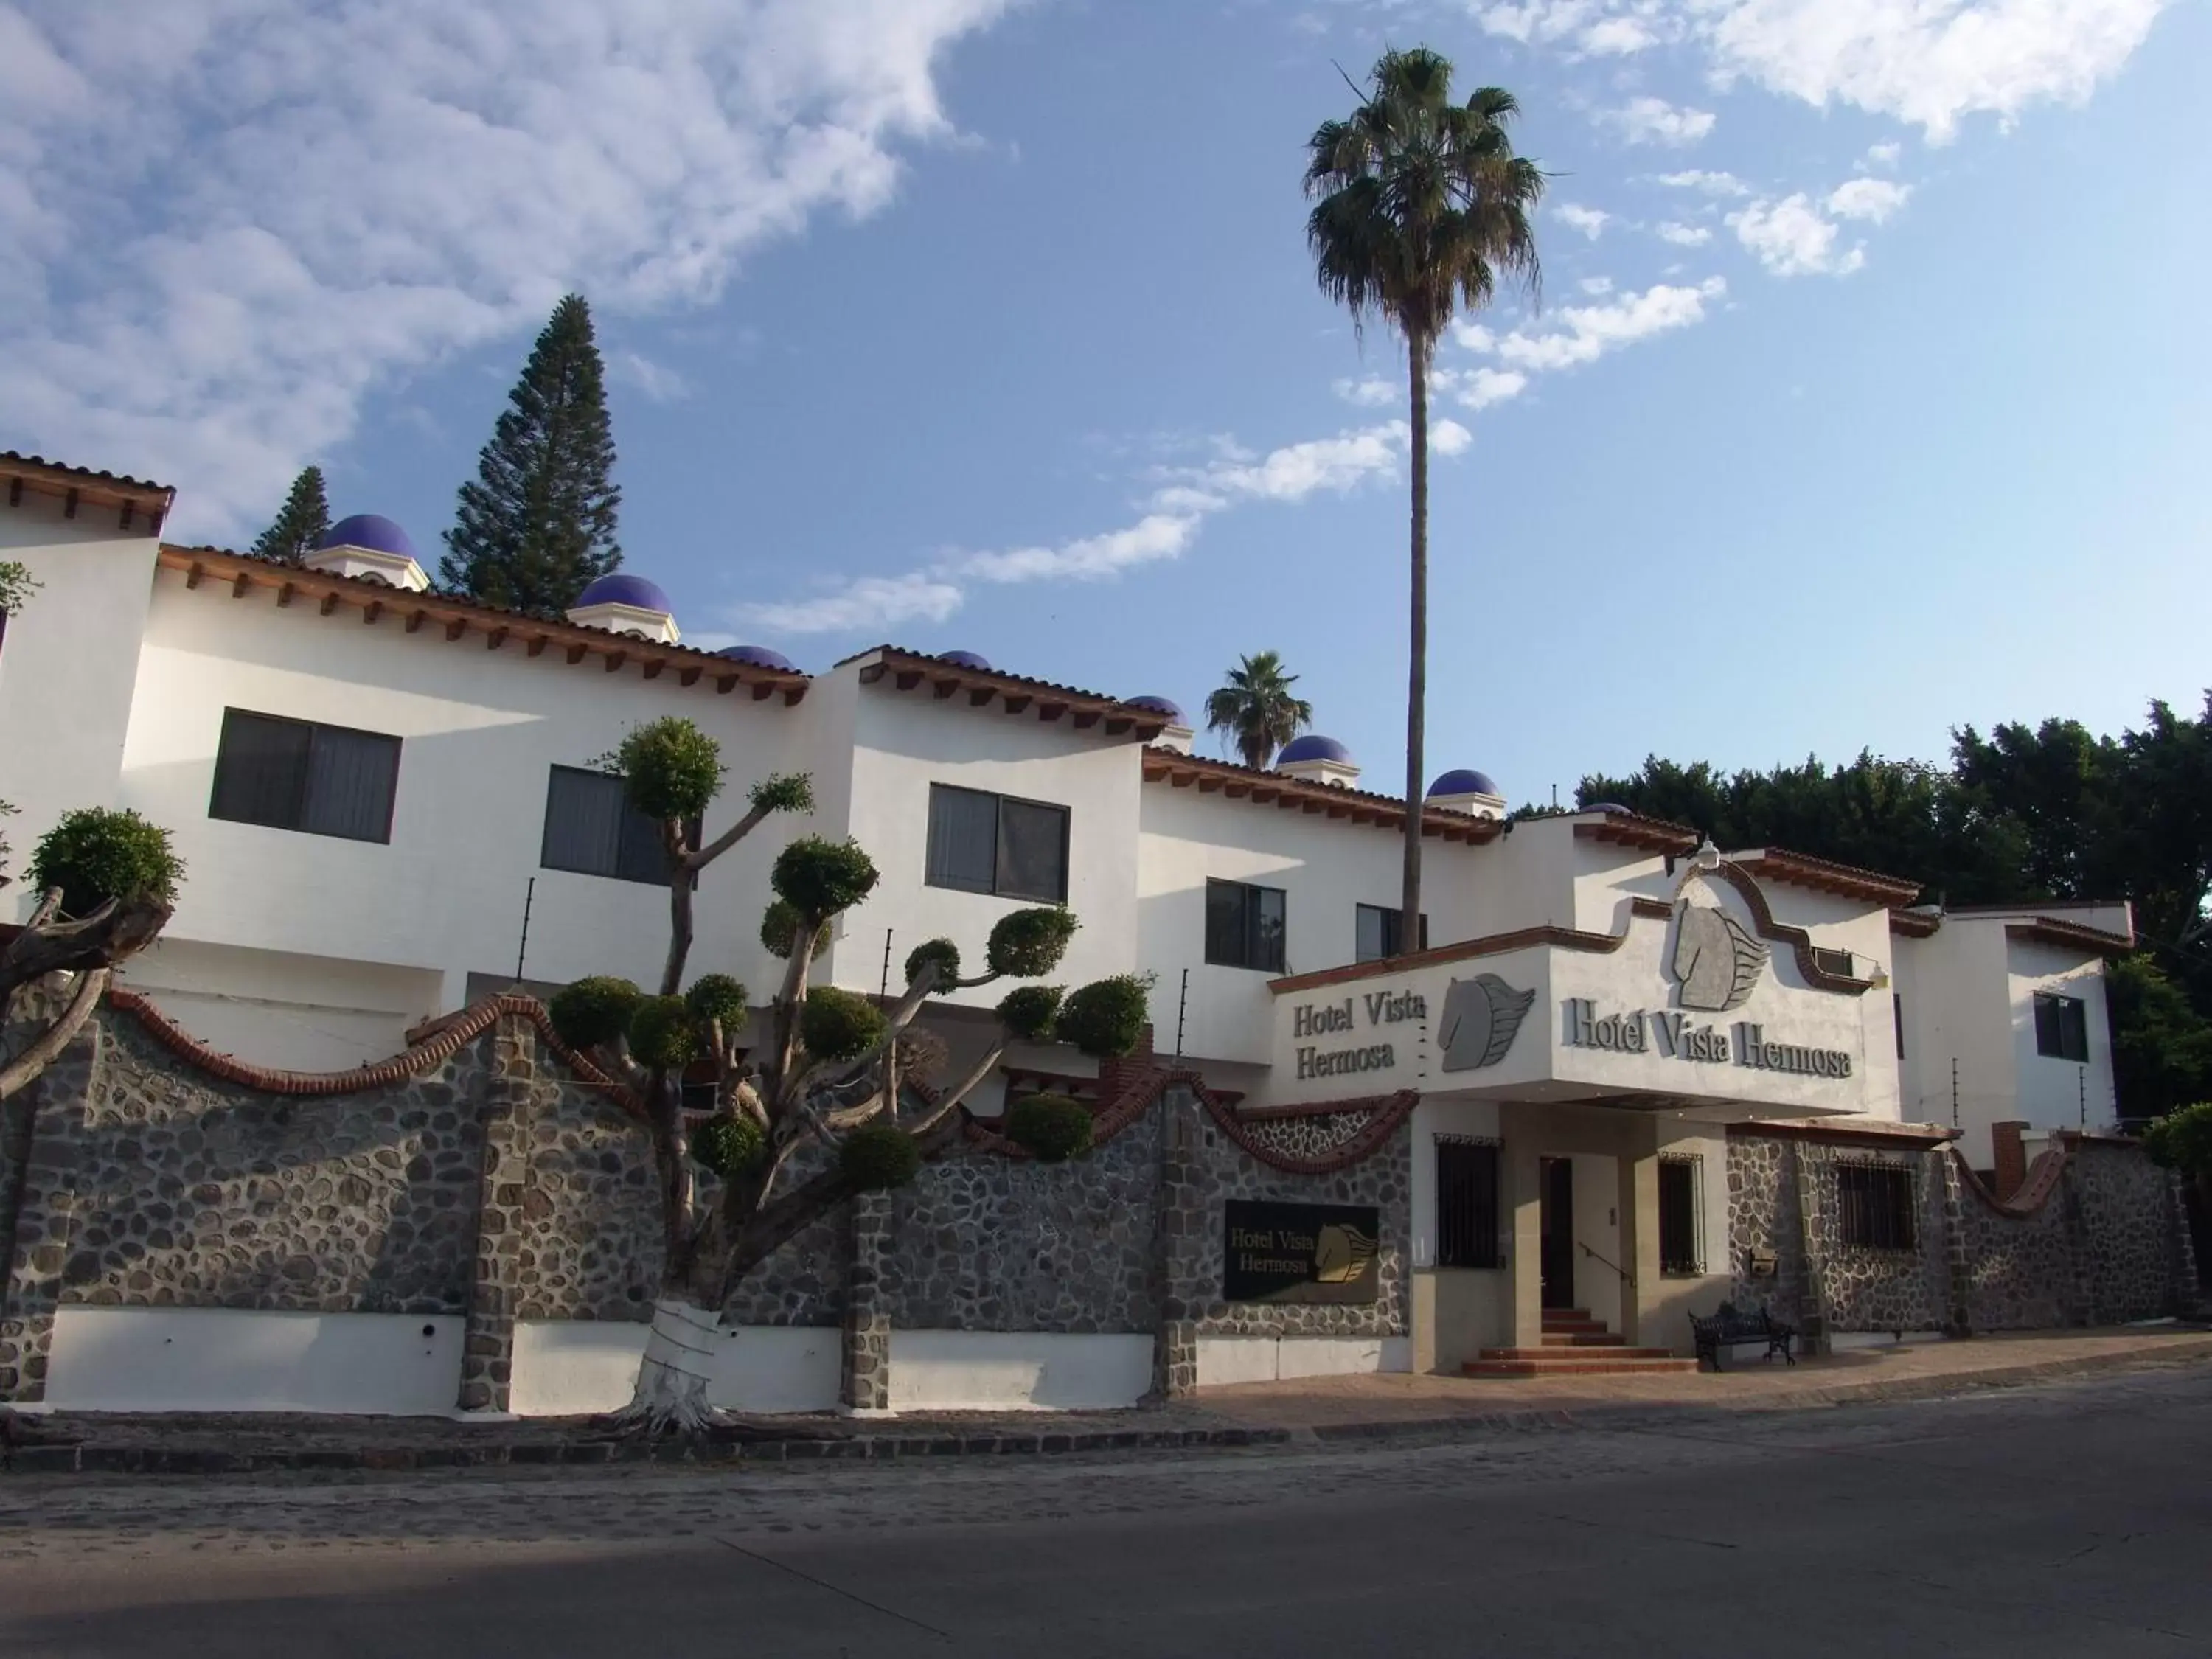 Off site, Property Building in Hotel Vista Hermosa